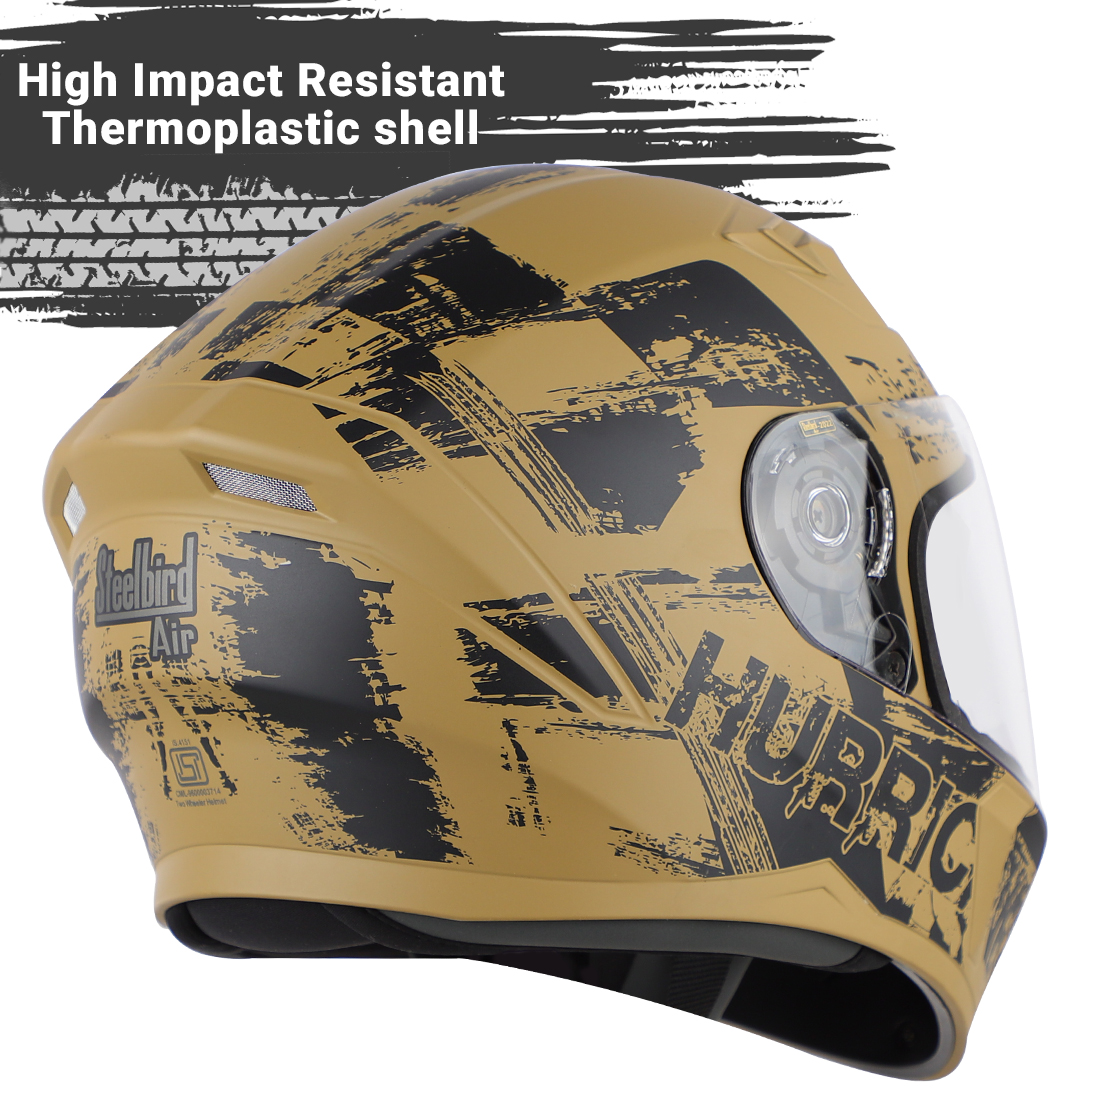 Steelbird SBA-21 Hurricane ISI Certified Full Face Graphic Helmet (Matt Desert Storm Grey)